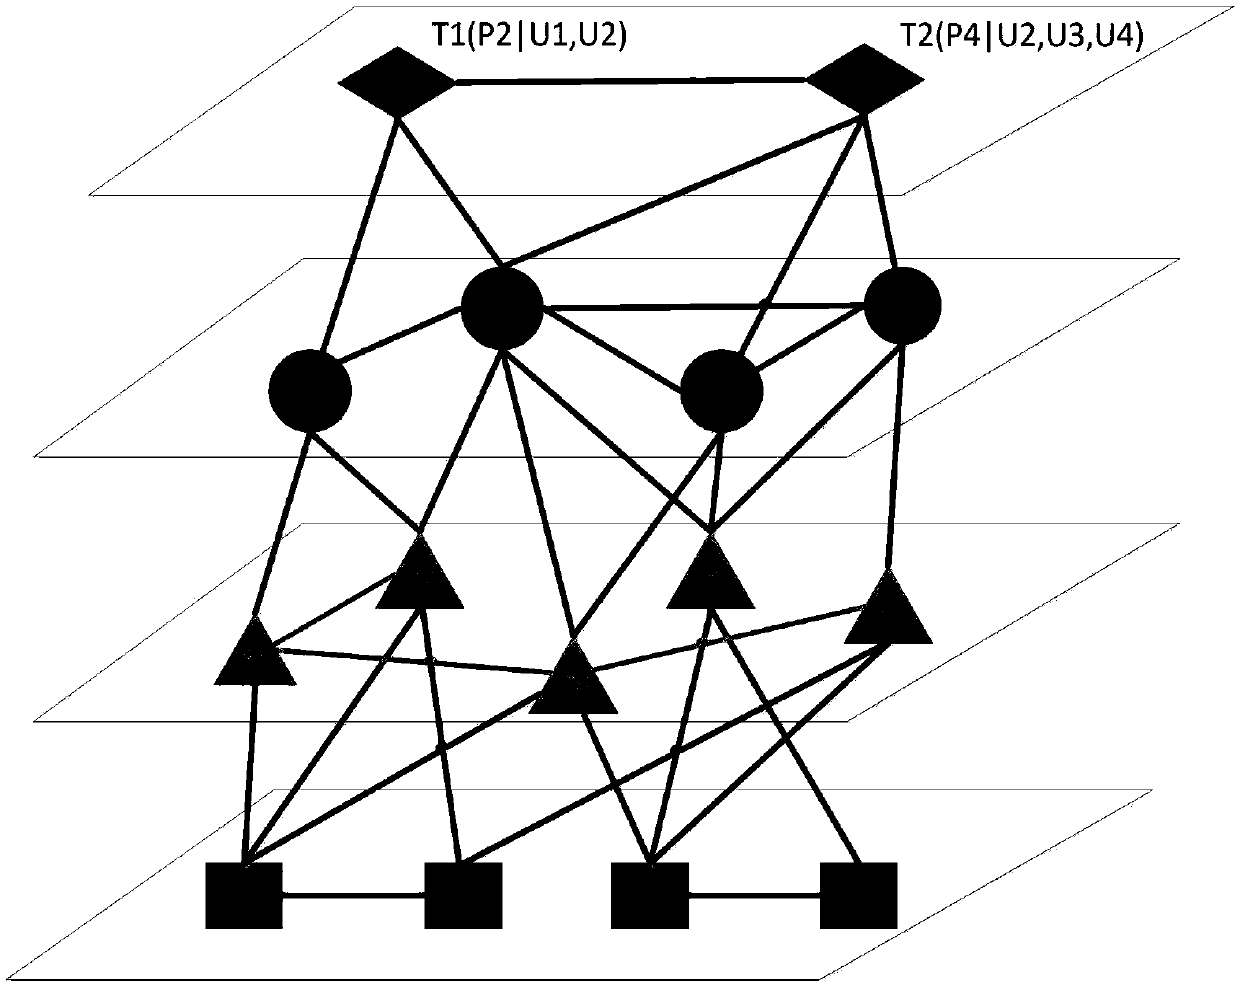 LBSN supernetwork link prediction method based on time-space relationship